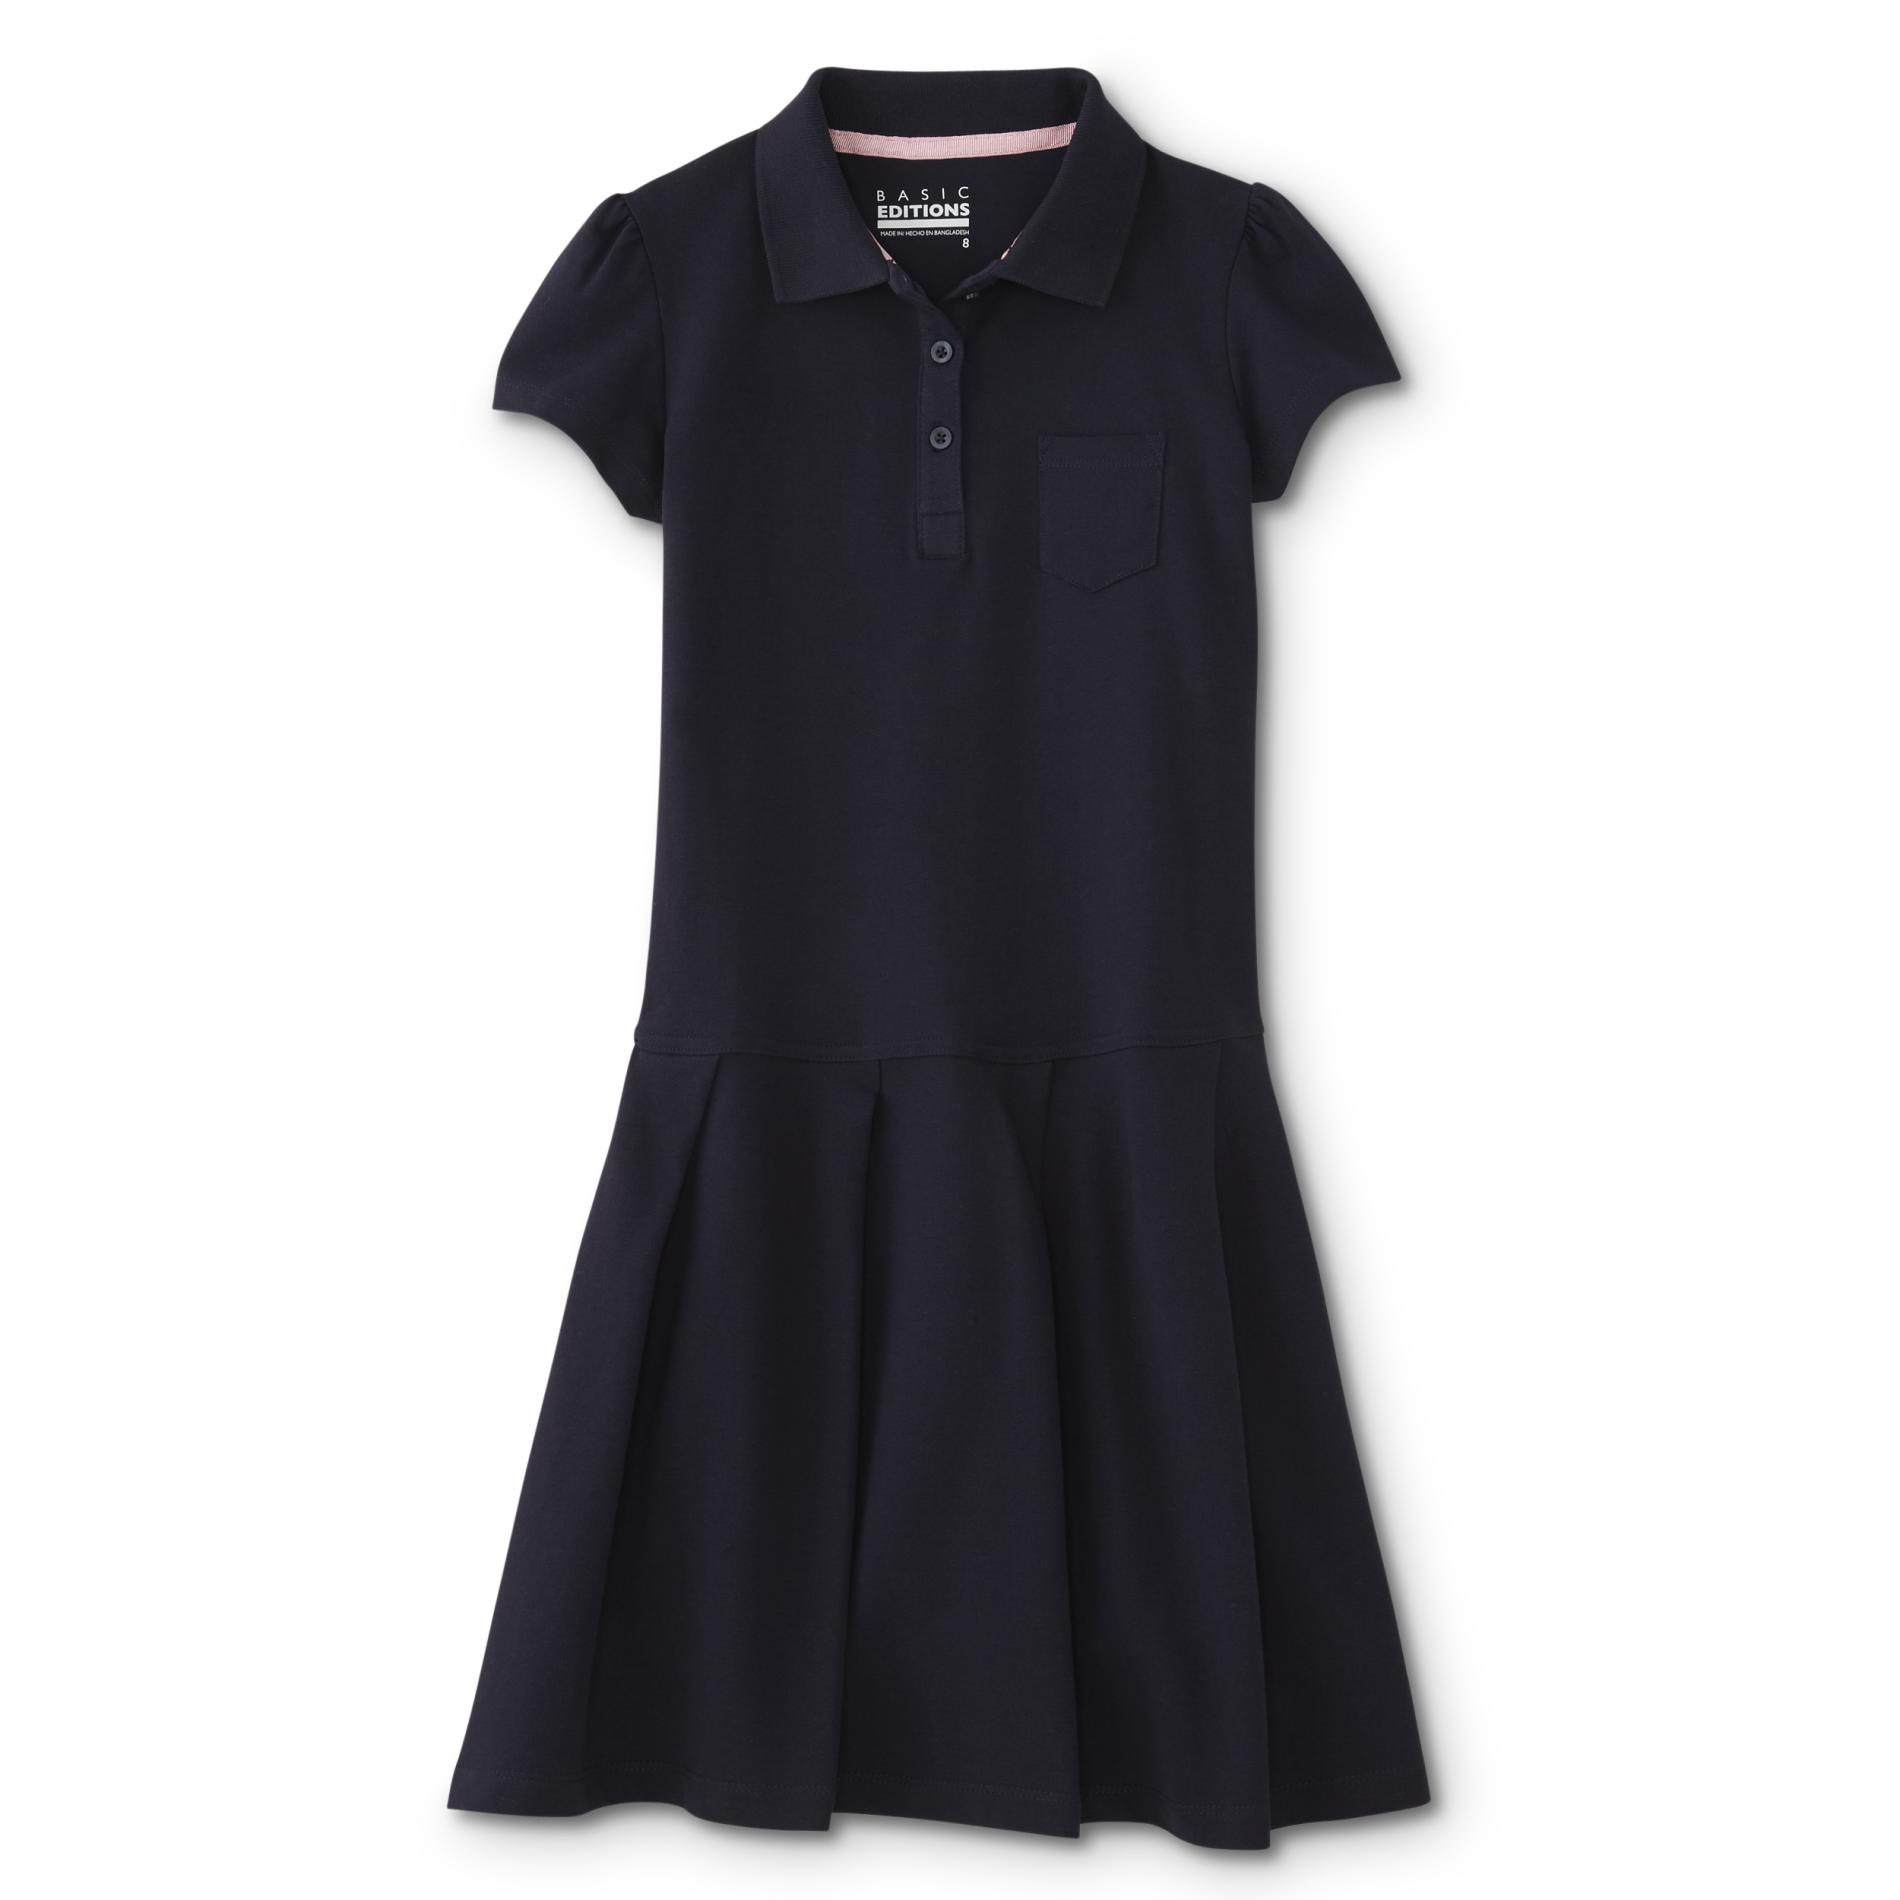 Basic Editions Girls' Polo Shirt Dress